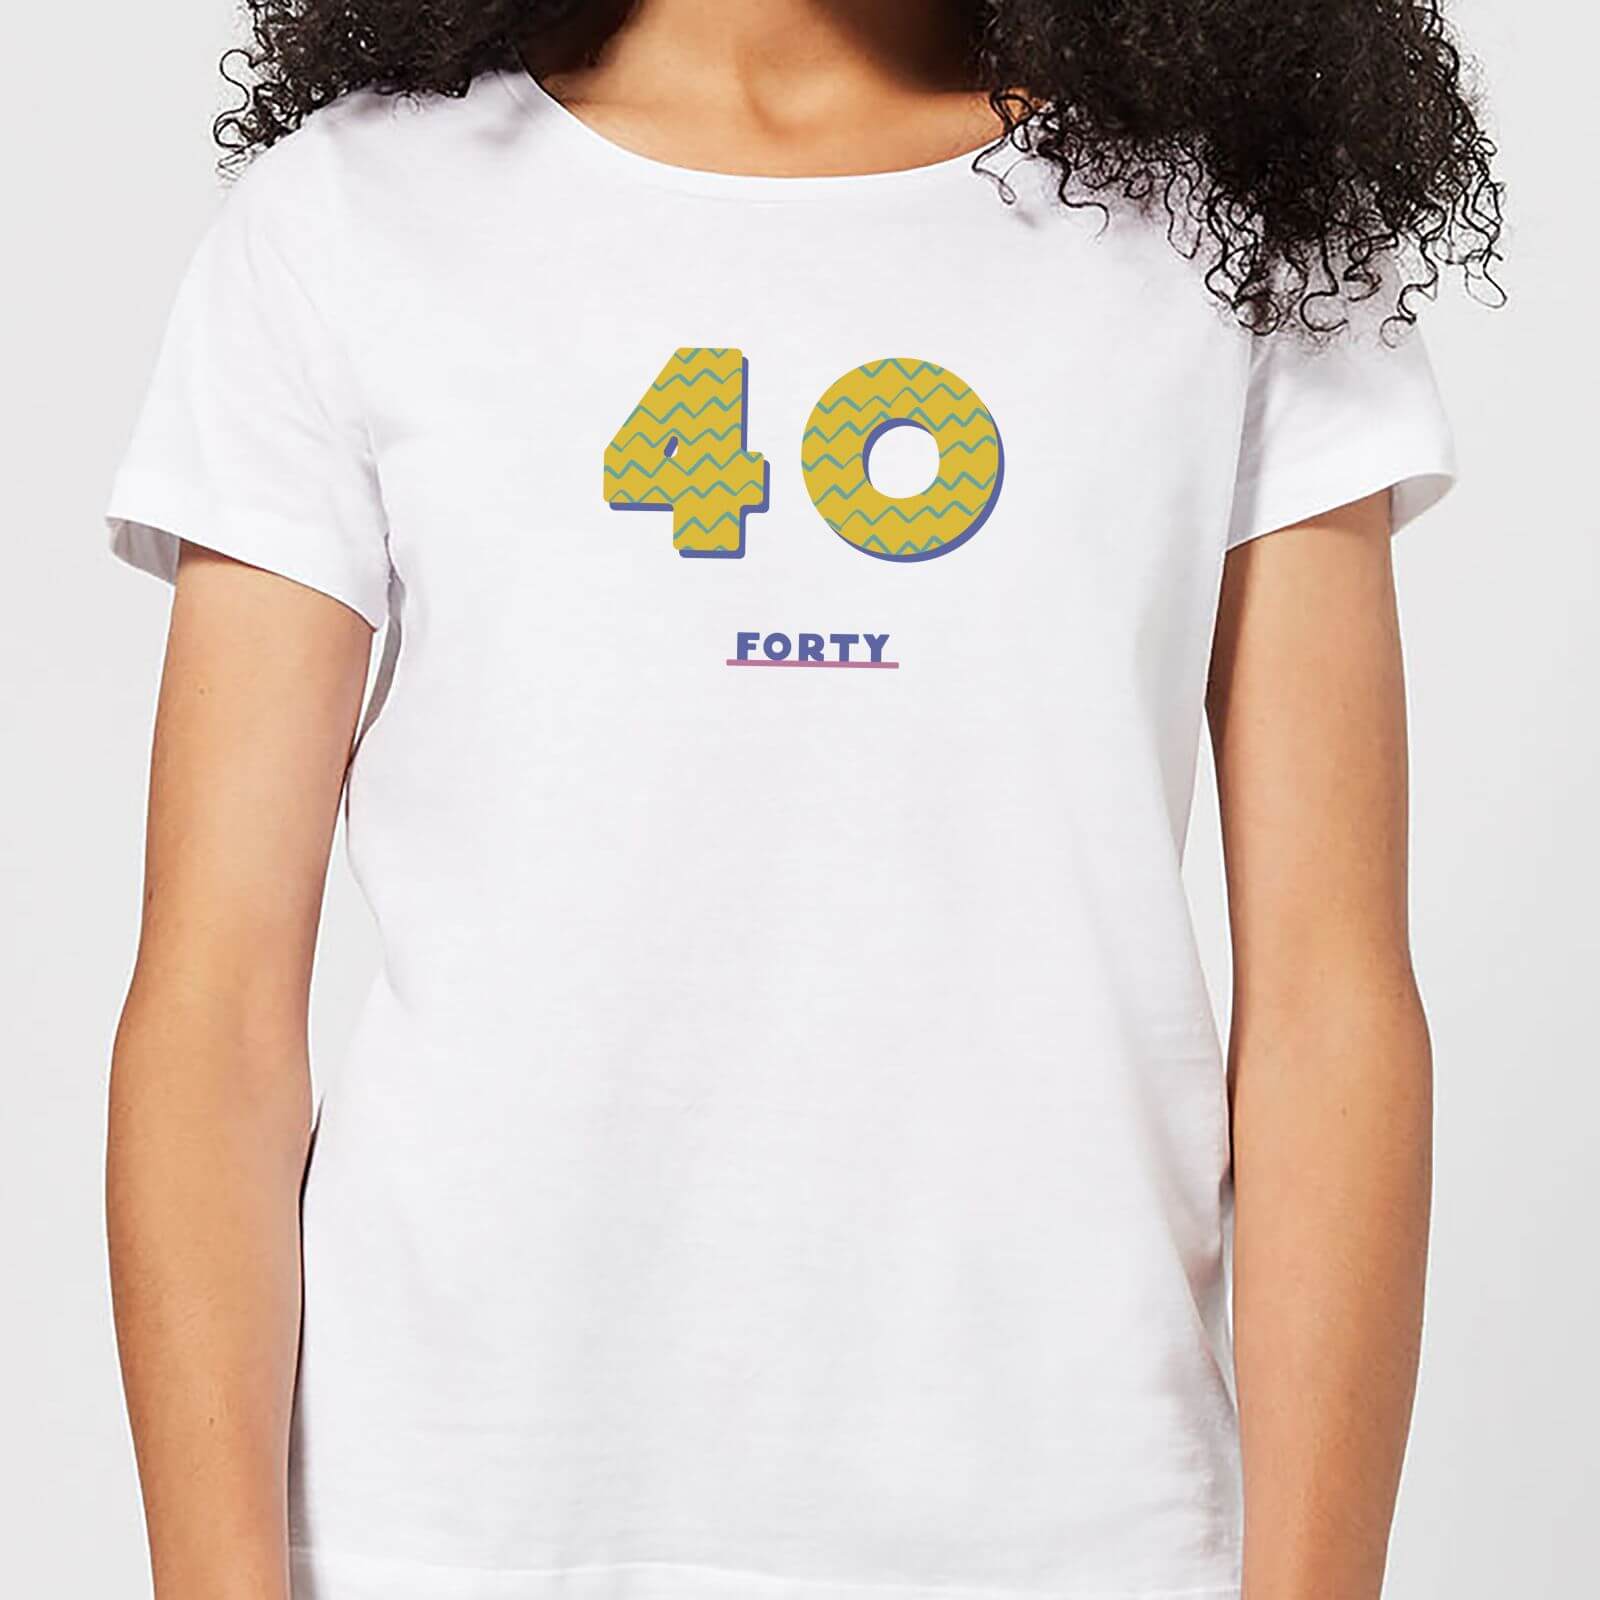 Forty Women's T-Shirt - White - XS - White